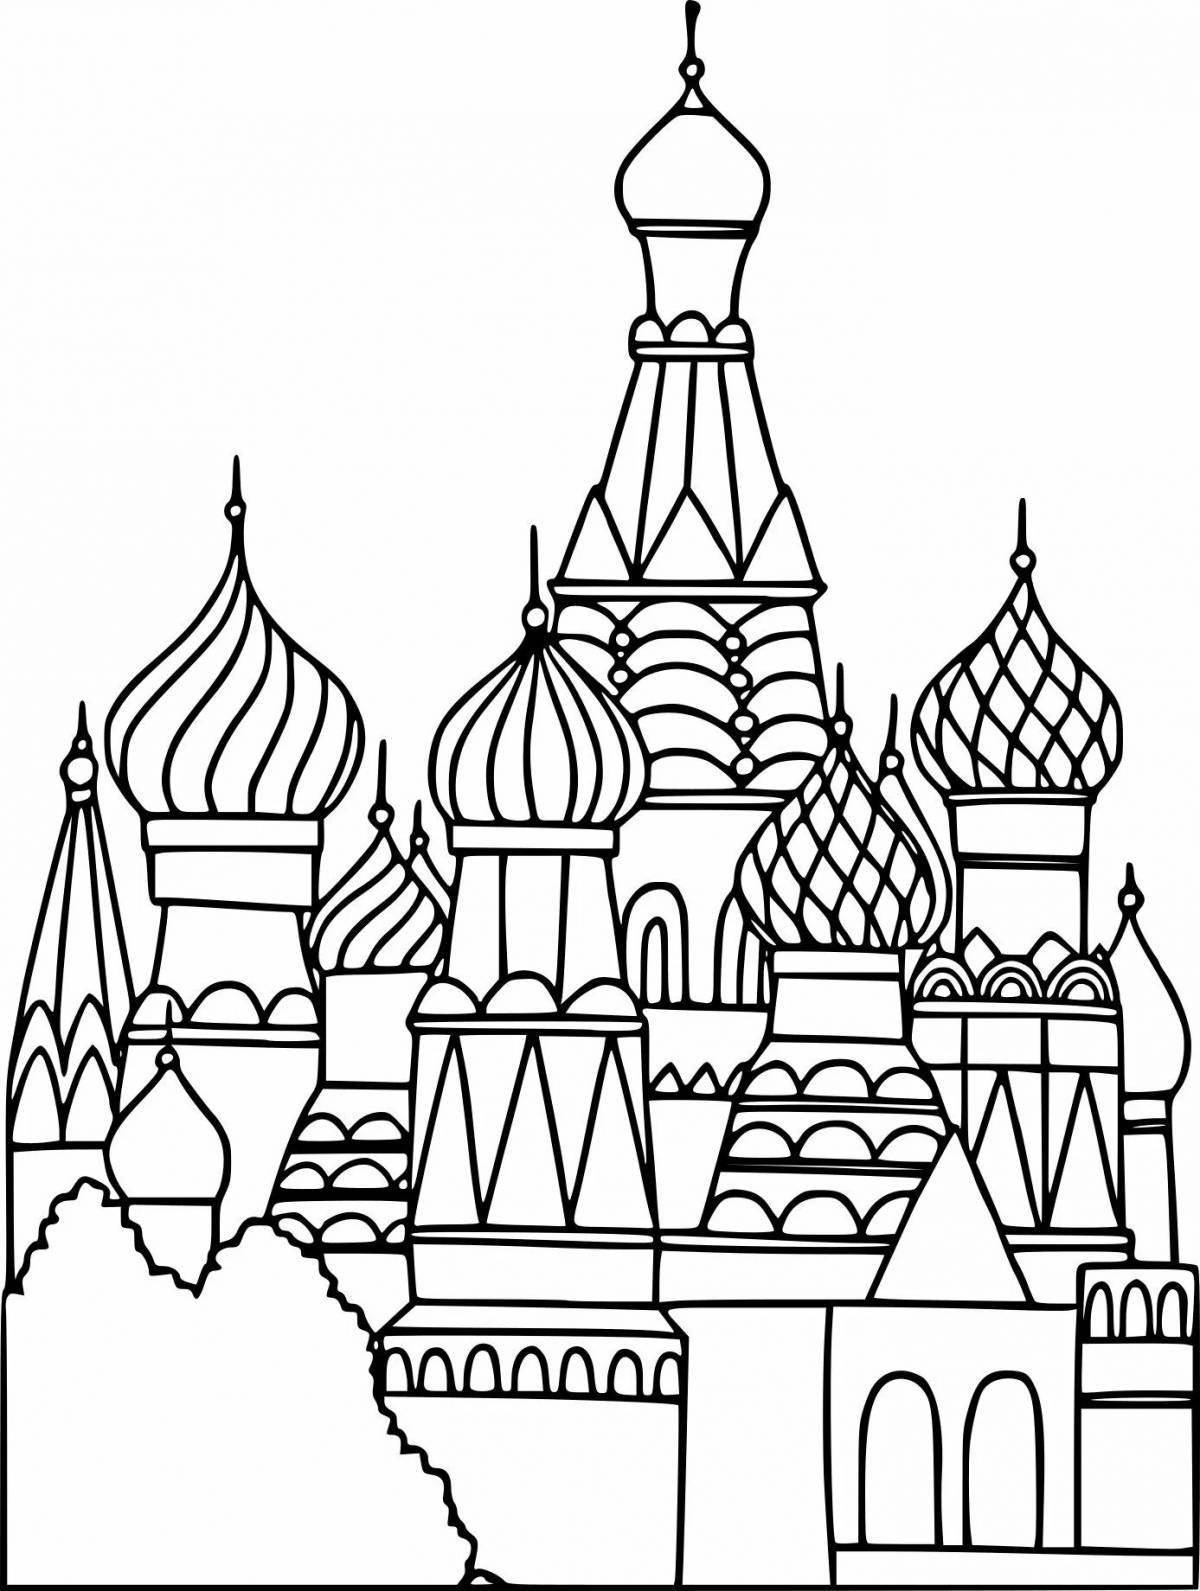 Tempting drawing of the Kremlin for children